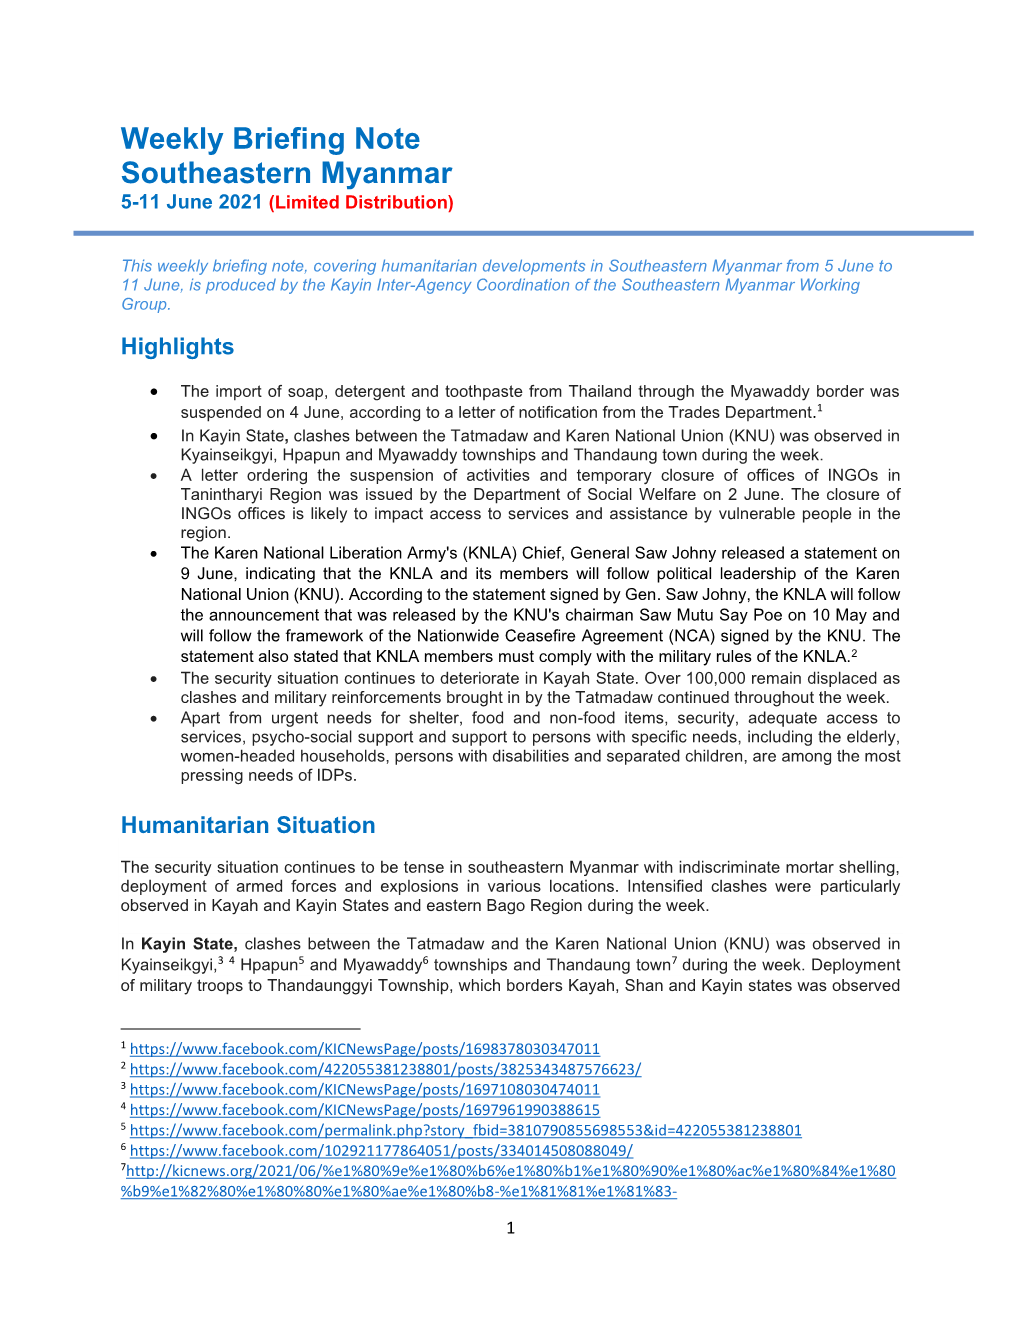 Weekly Briefing Note Southeastern Myanmar 5-11 June 2021 (Limited Distribution)